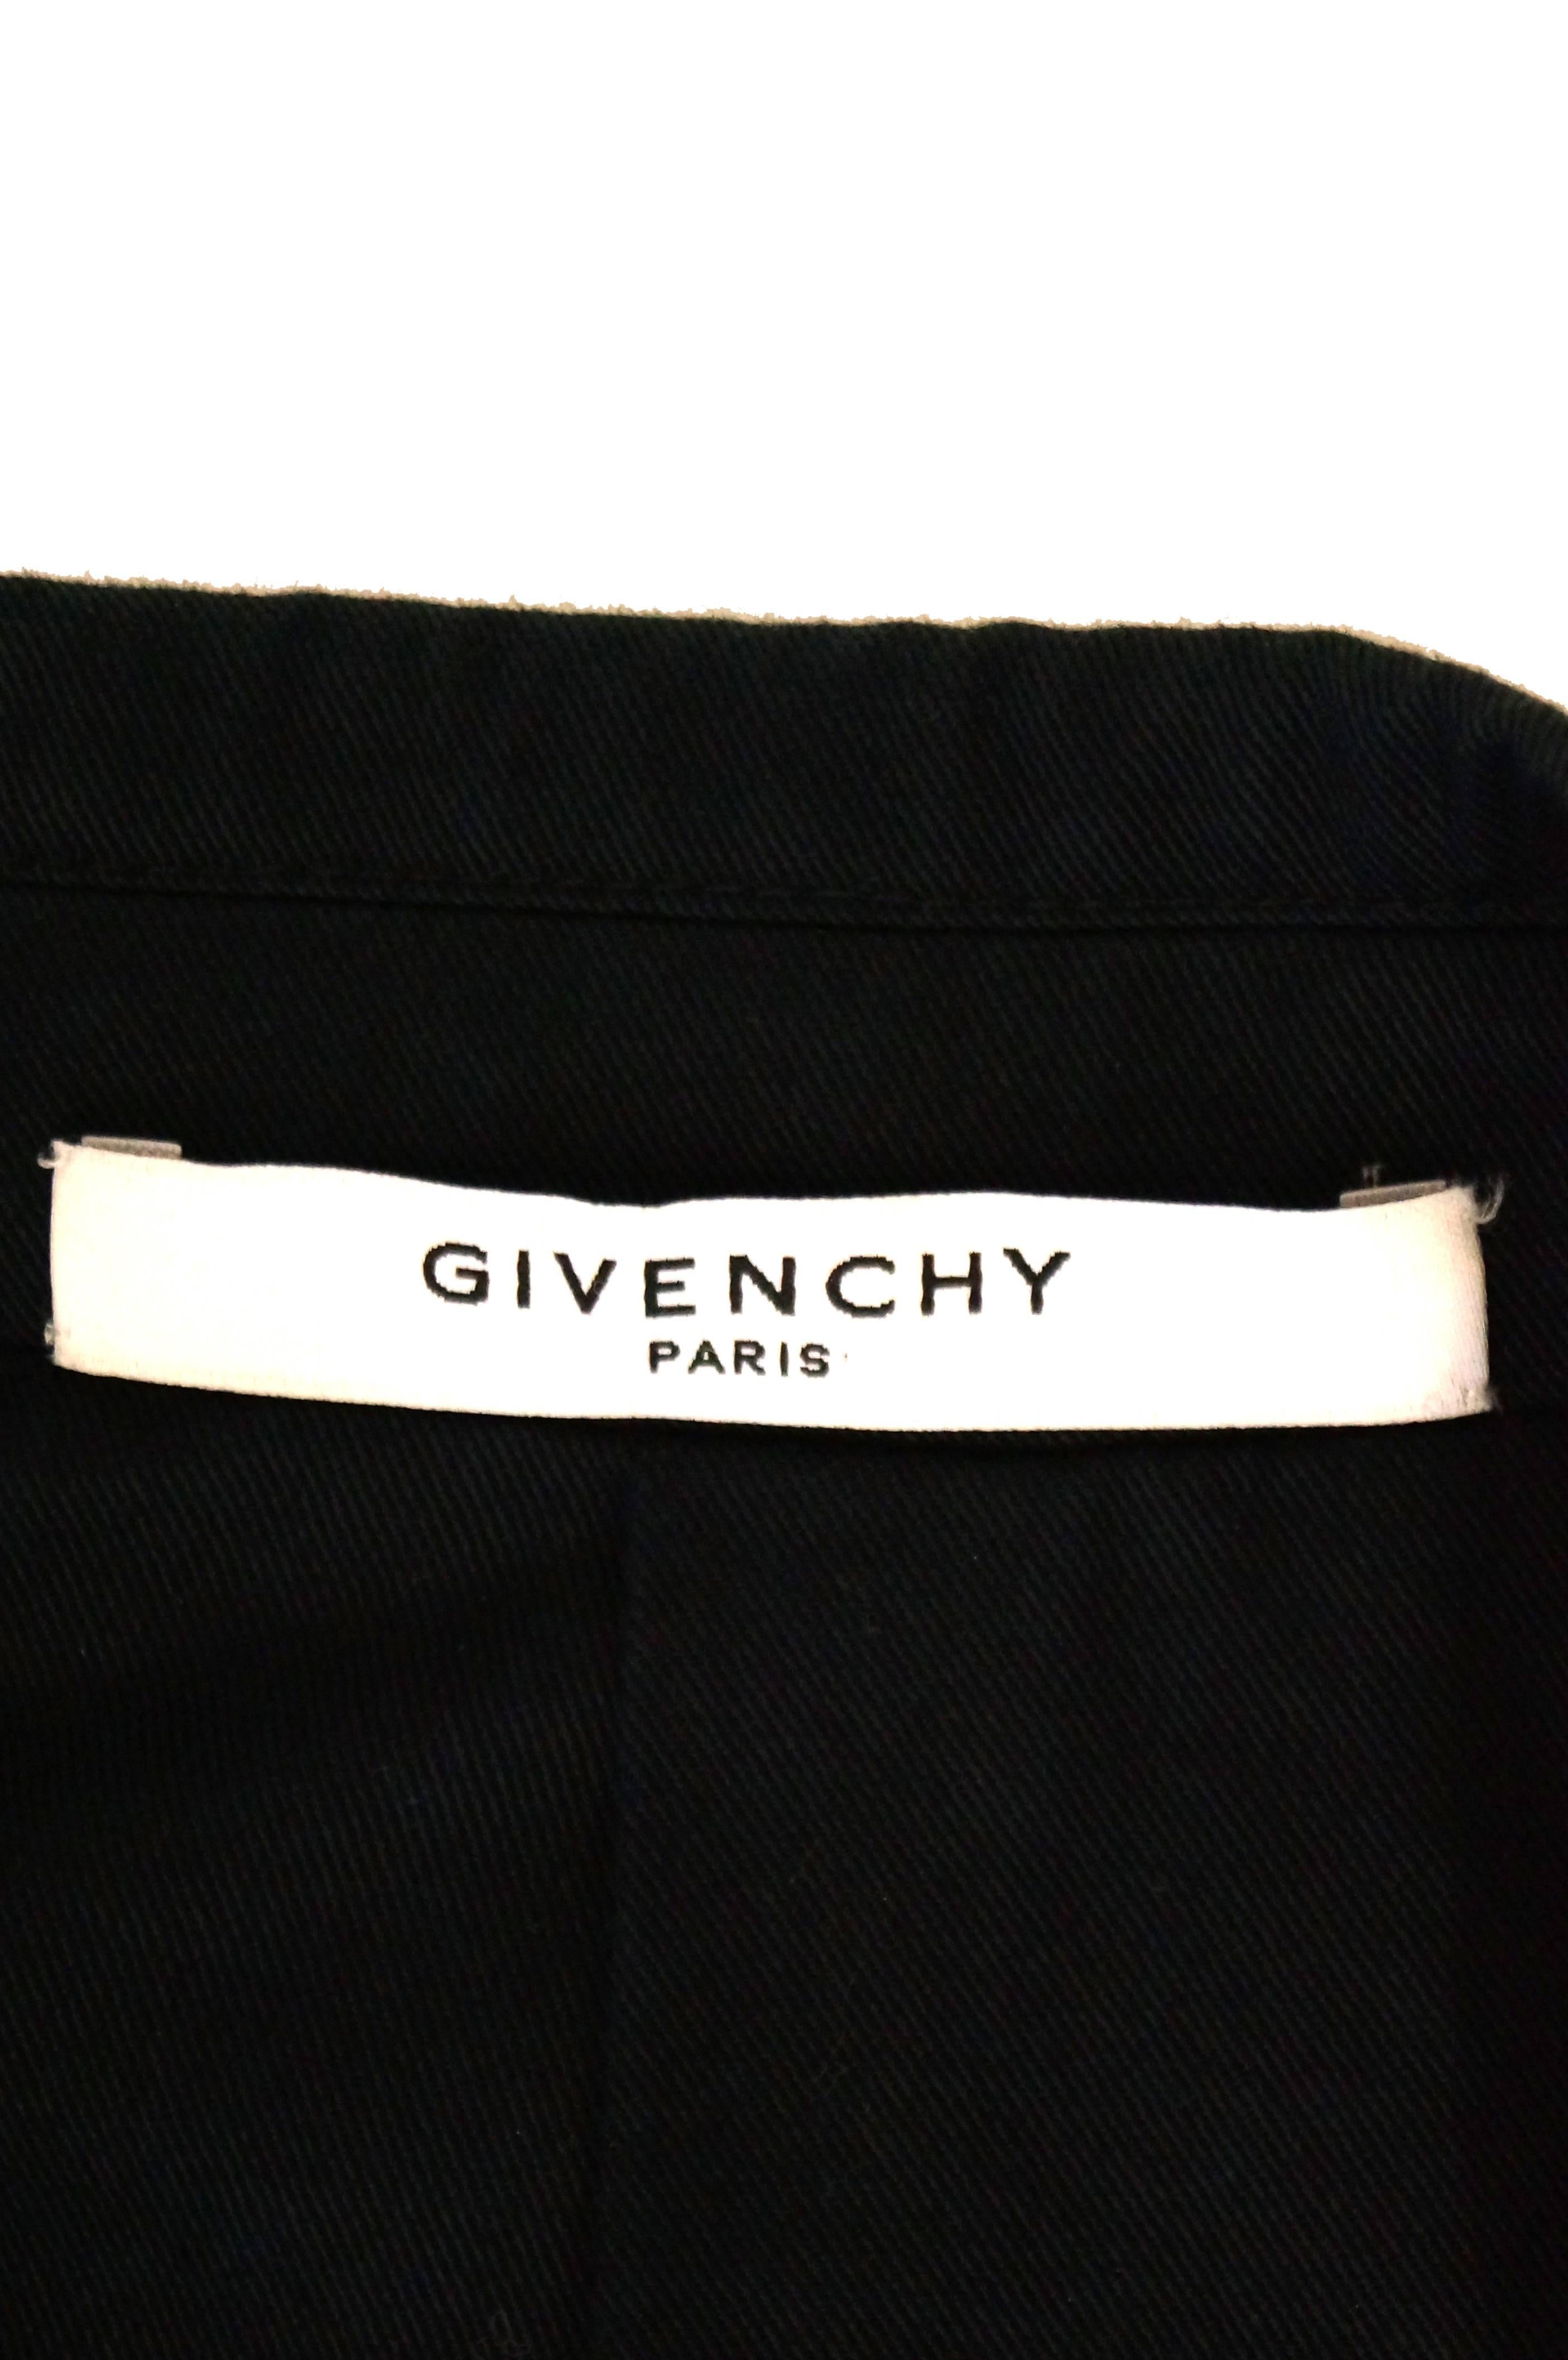 Givenchy Black Floral Lace Back Panel Blazer For Sale 8